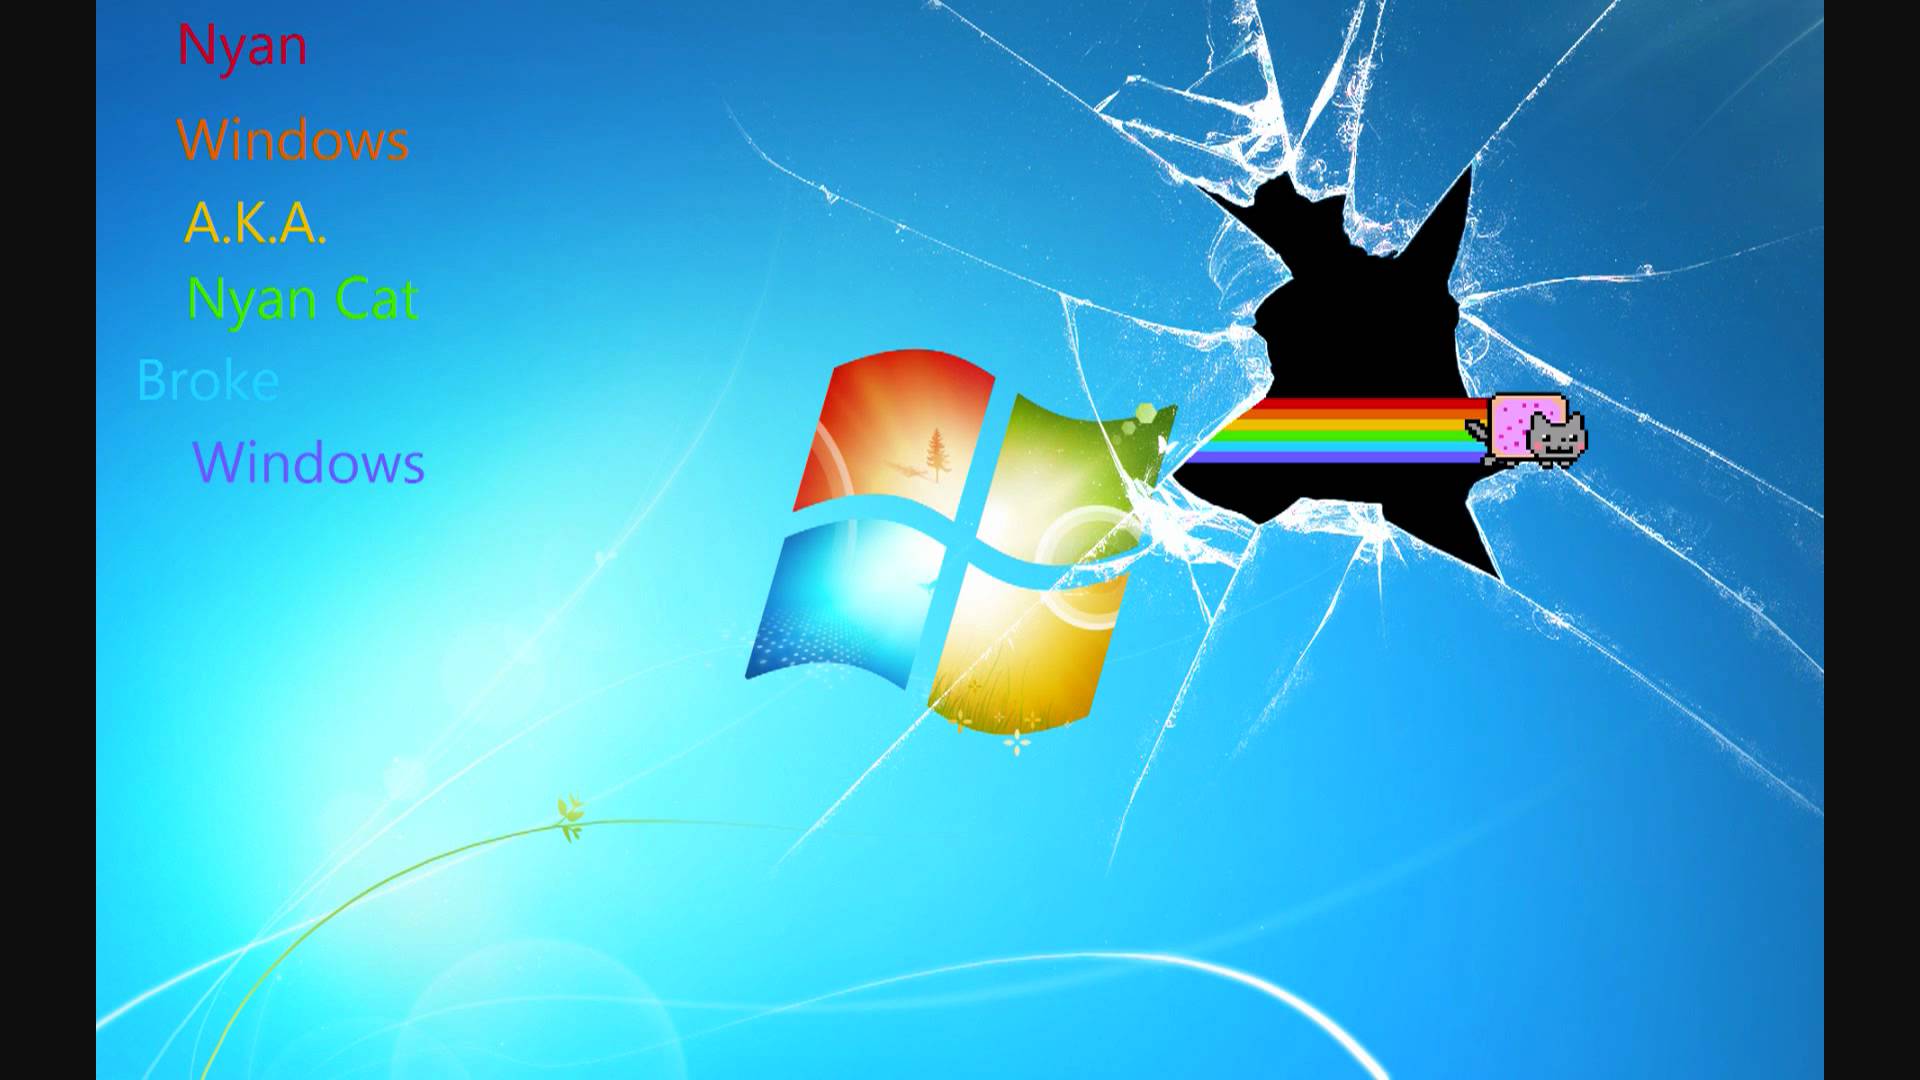 Nyan Windows 7 (AKA Nyan Cat Broke Windows) - YouTube